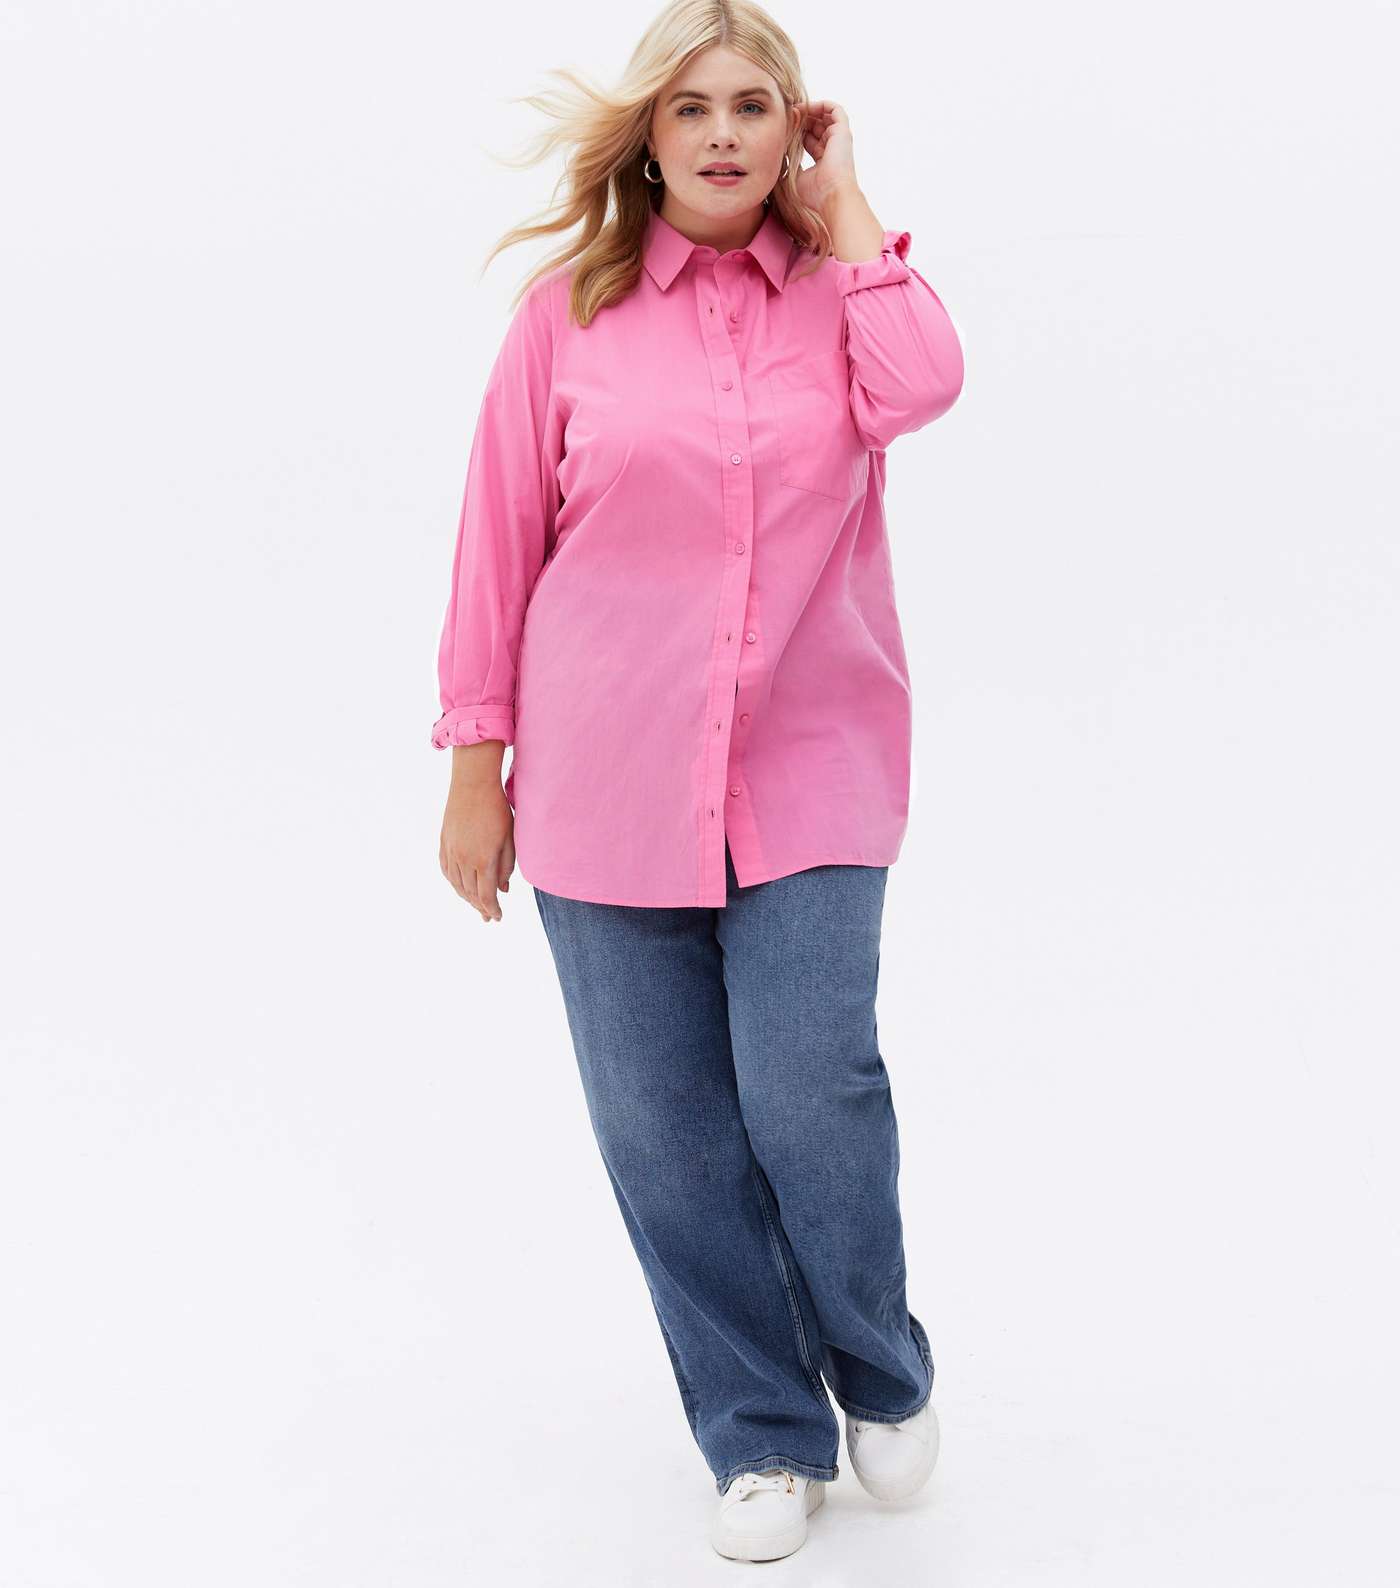 Curves Bright Pink Poplin Long Sleeve Shirt Image 2